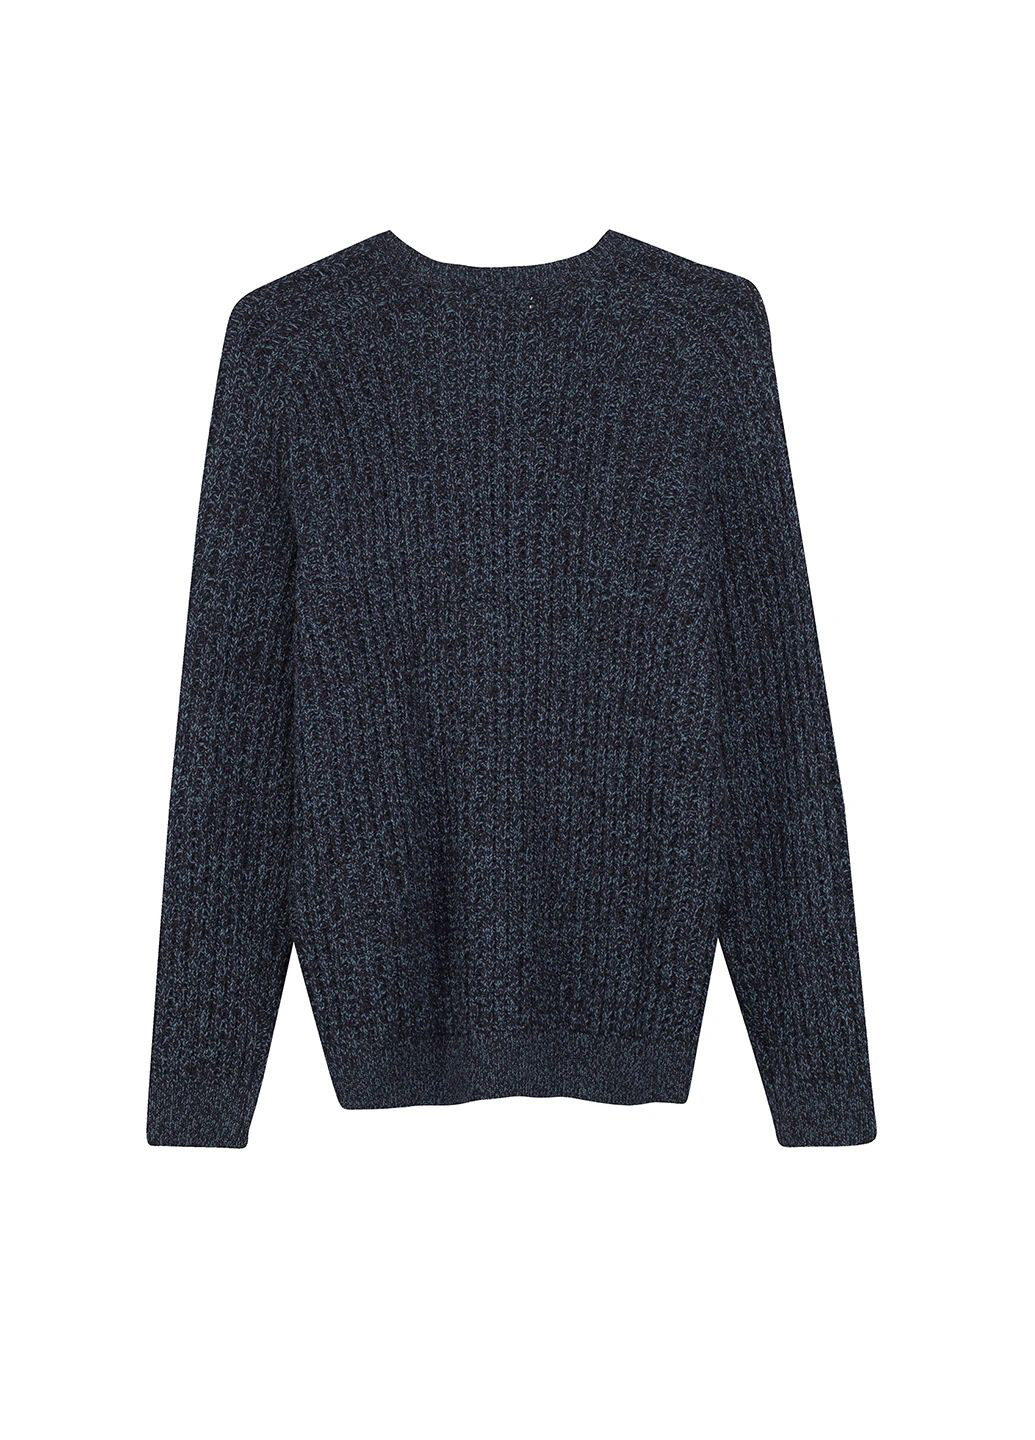 Темно-синий демисезонный свитер джемпер C&A